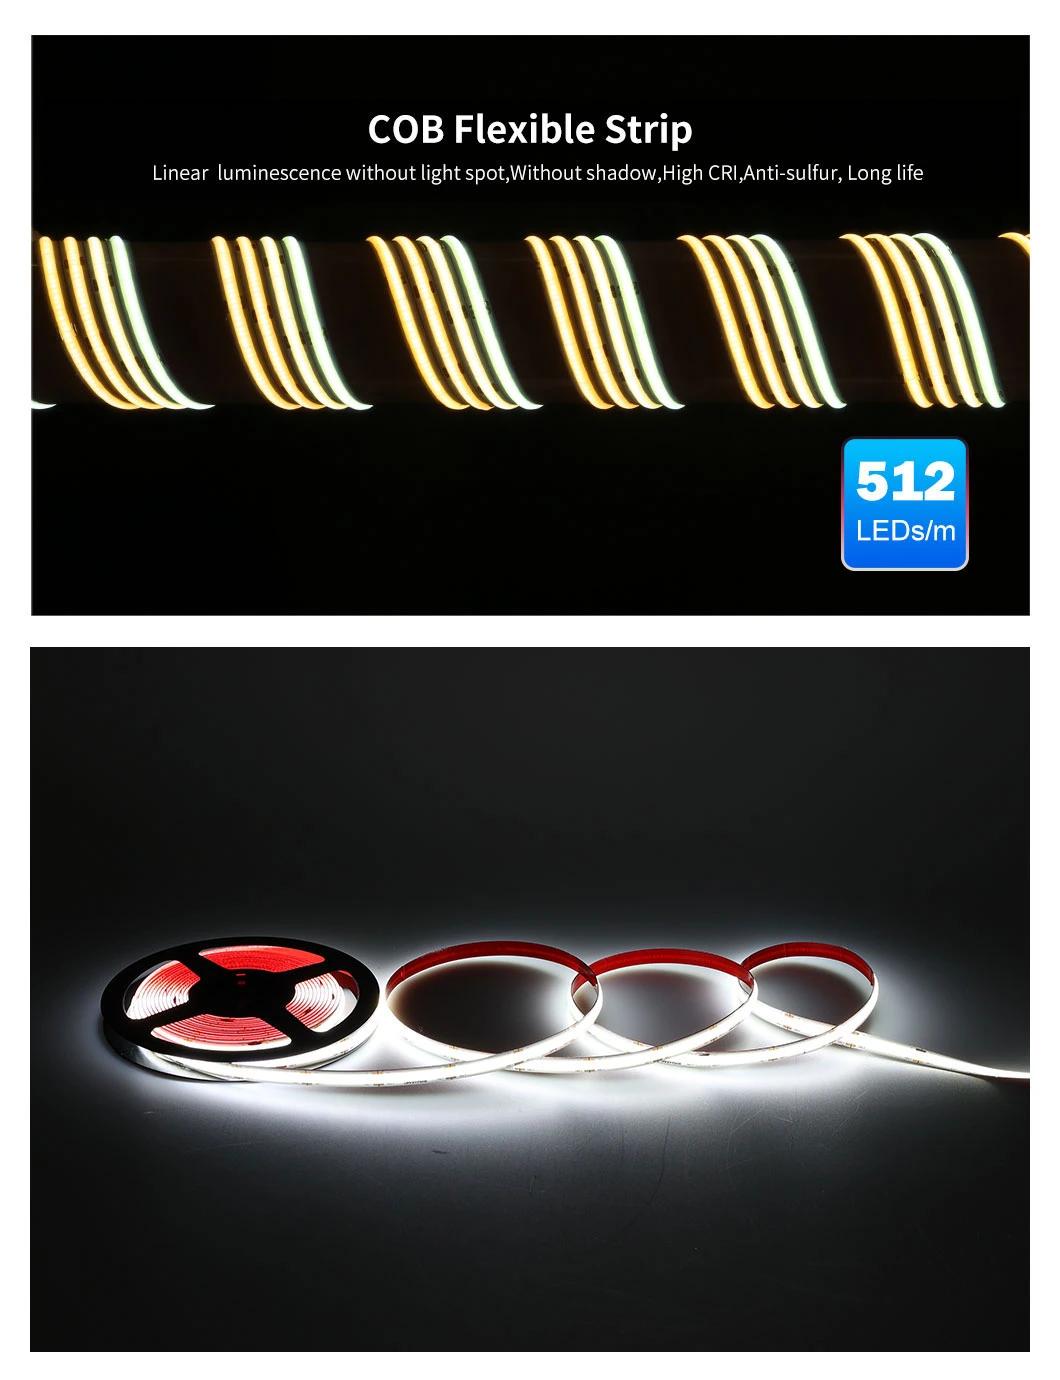 China Brilliant Heat Dissipation Design Good Circuit Layout Long Life 960-1080lm COB LED Linear Strip